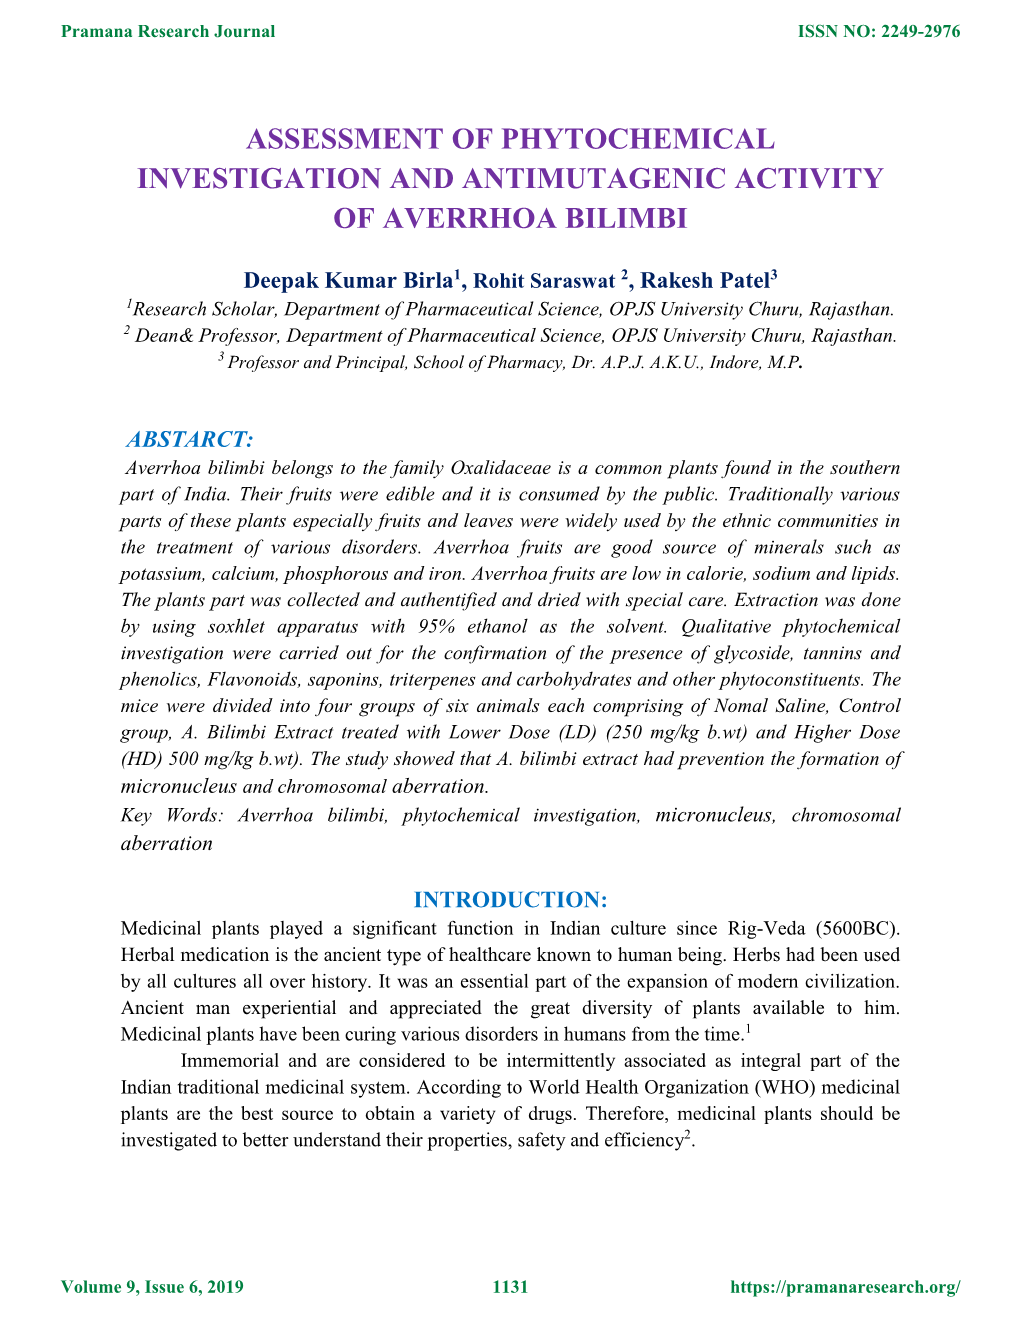 Assessment of Phytochemical Investigation and Antimutagenic Activity of Averrhoa Bilimbi